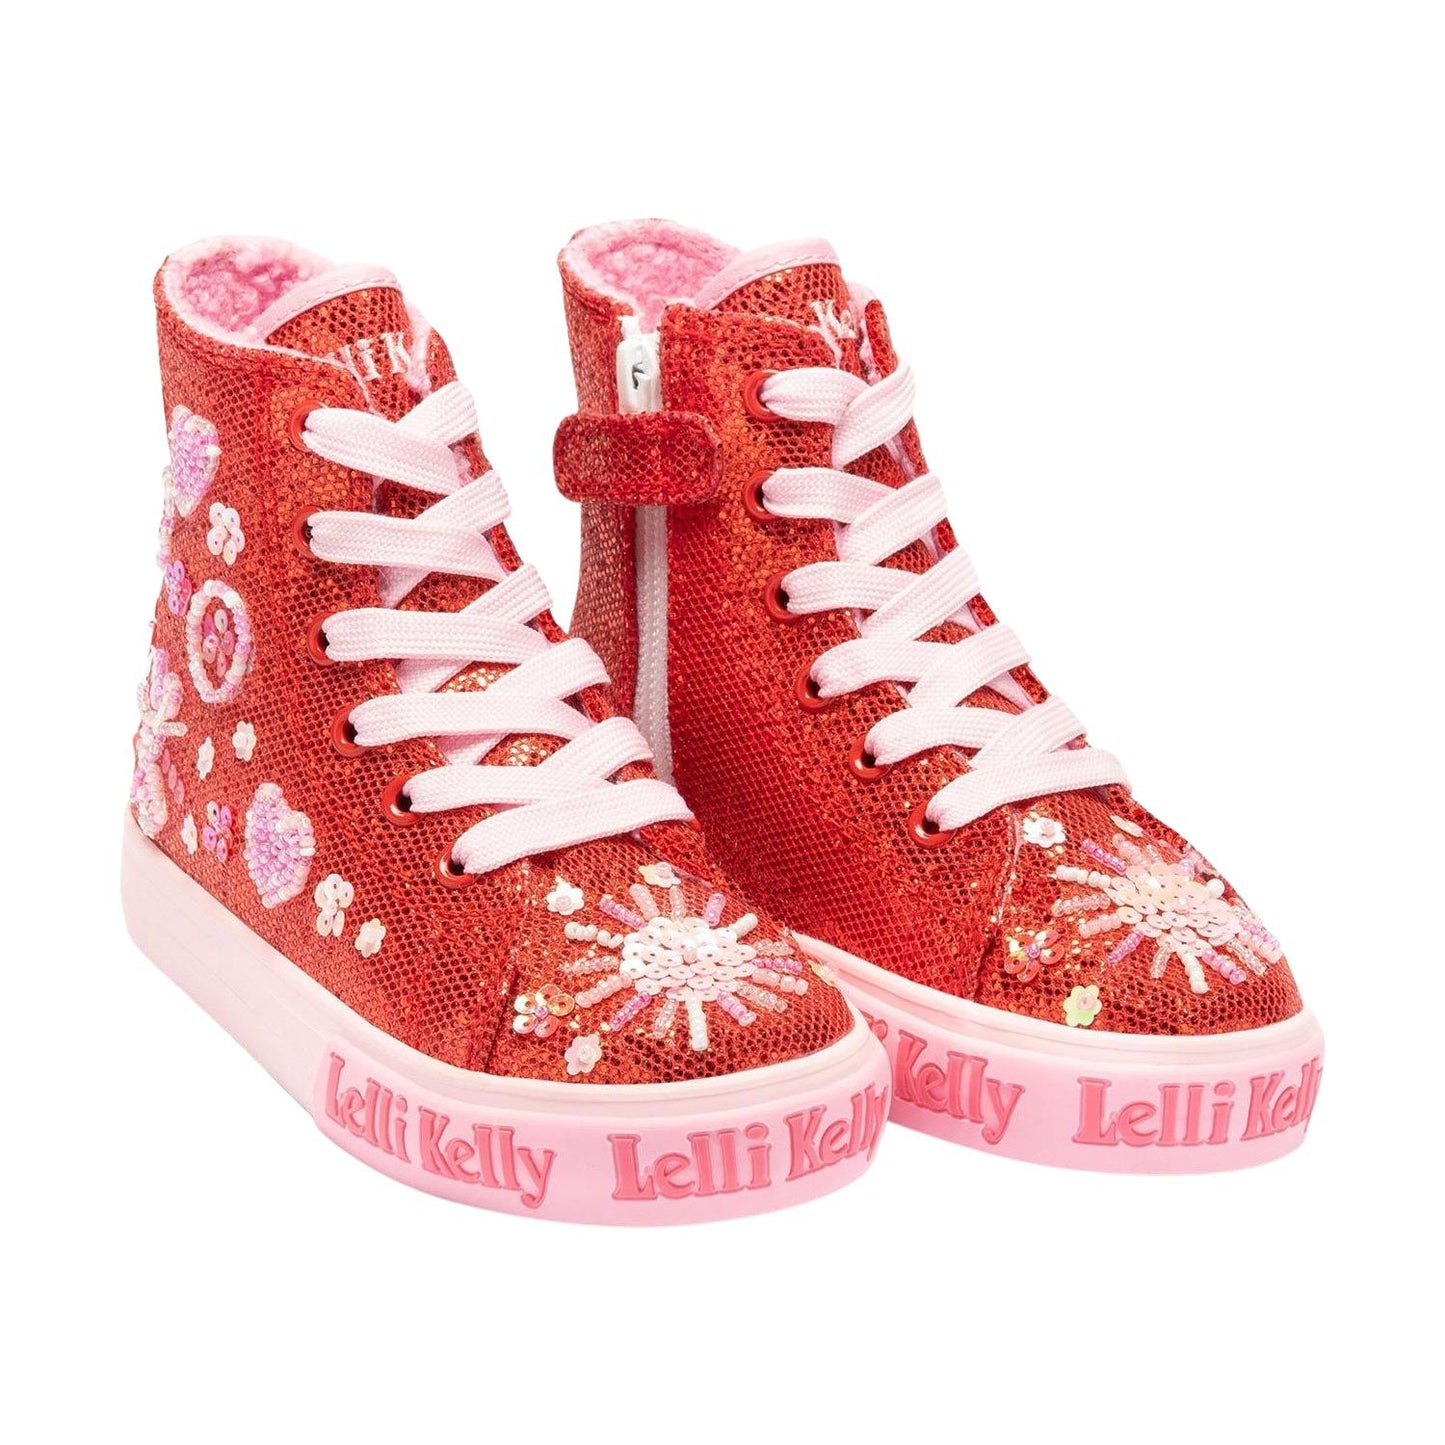 Lelli Kelly LK3861 (GD01) Dafne Mid Red Glitter Warm Lined Canvas Baseball Boots